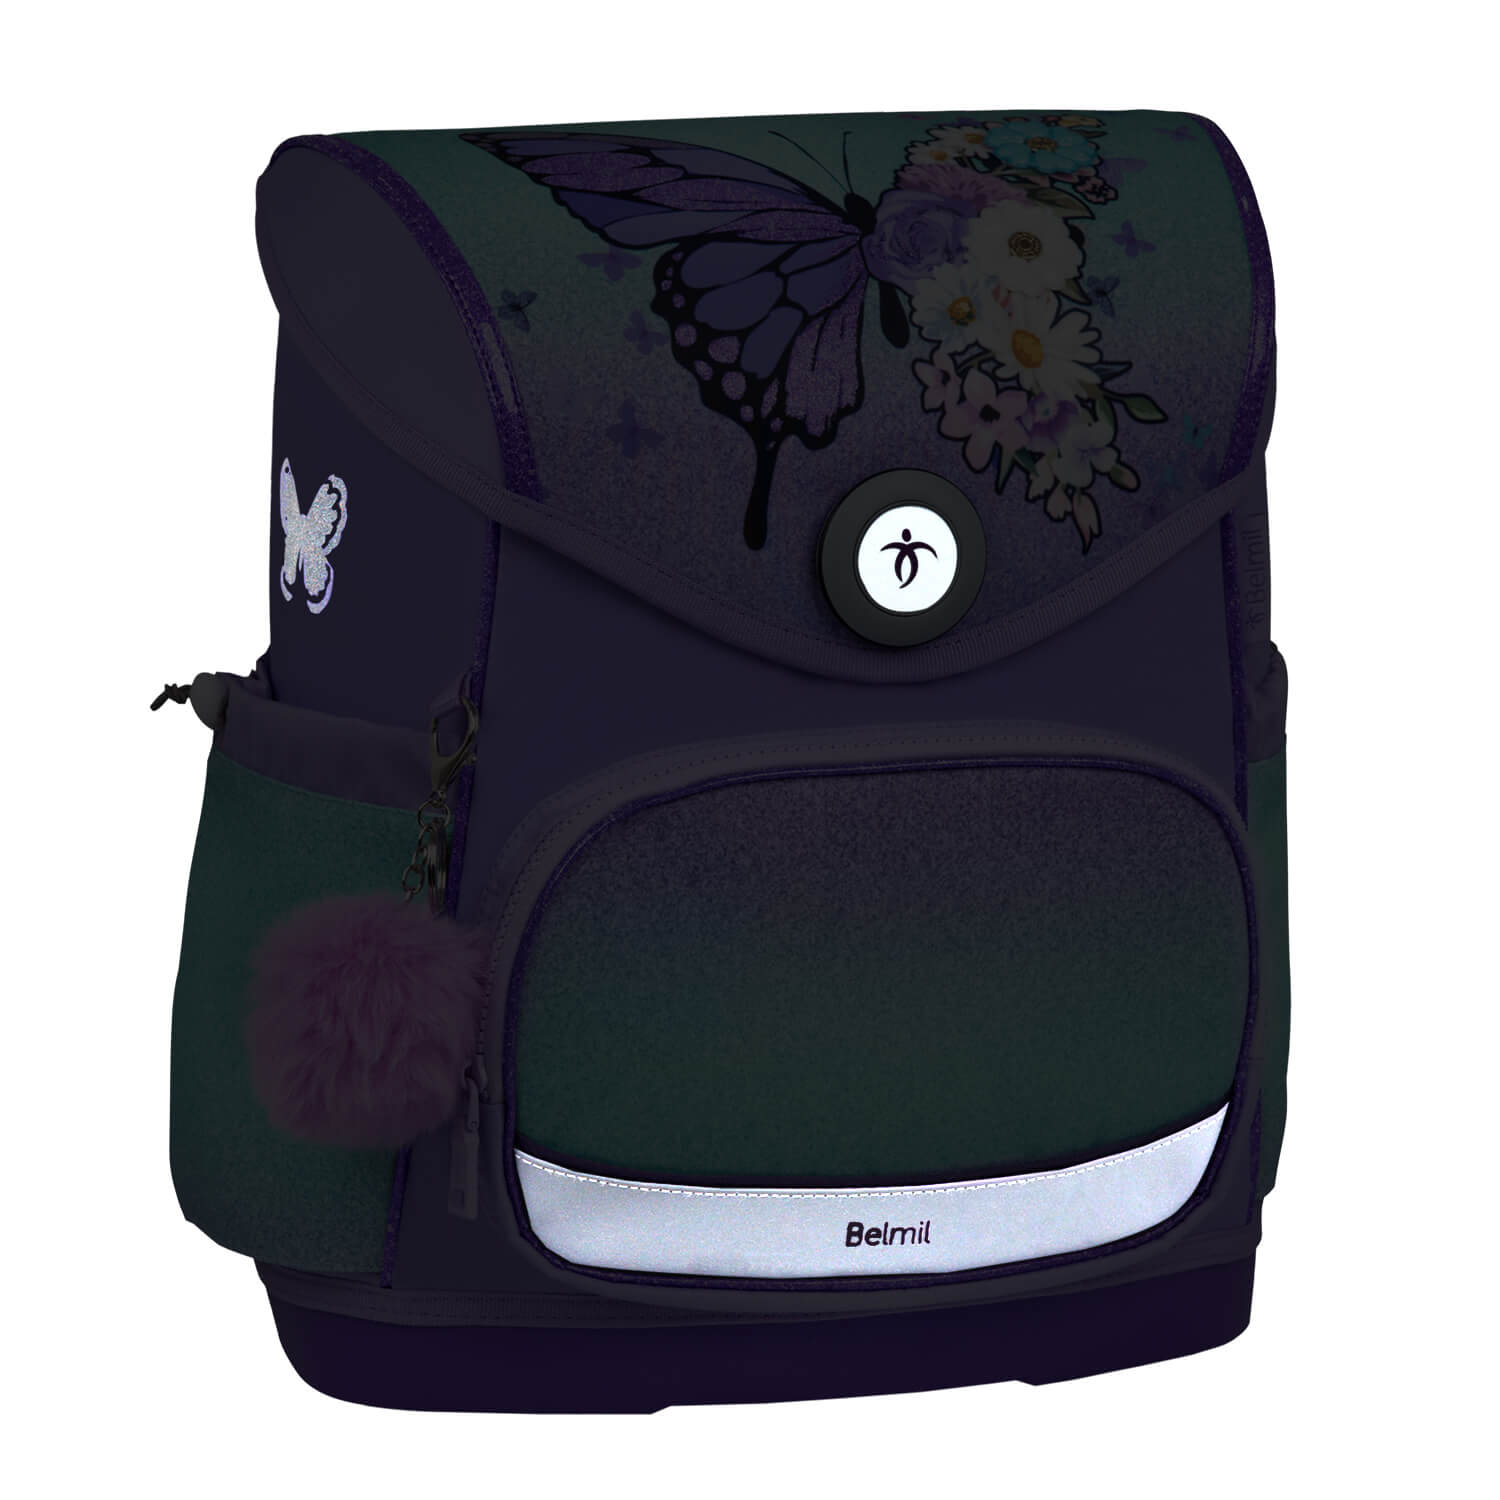 Premium Compact Plus Serenity Schoolbag set 5pcs.